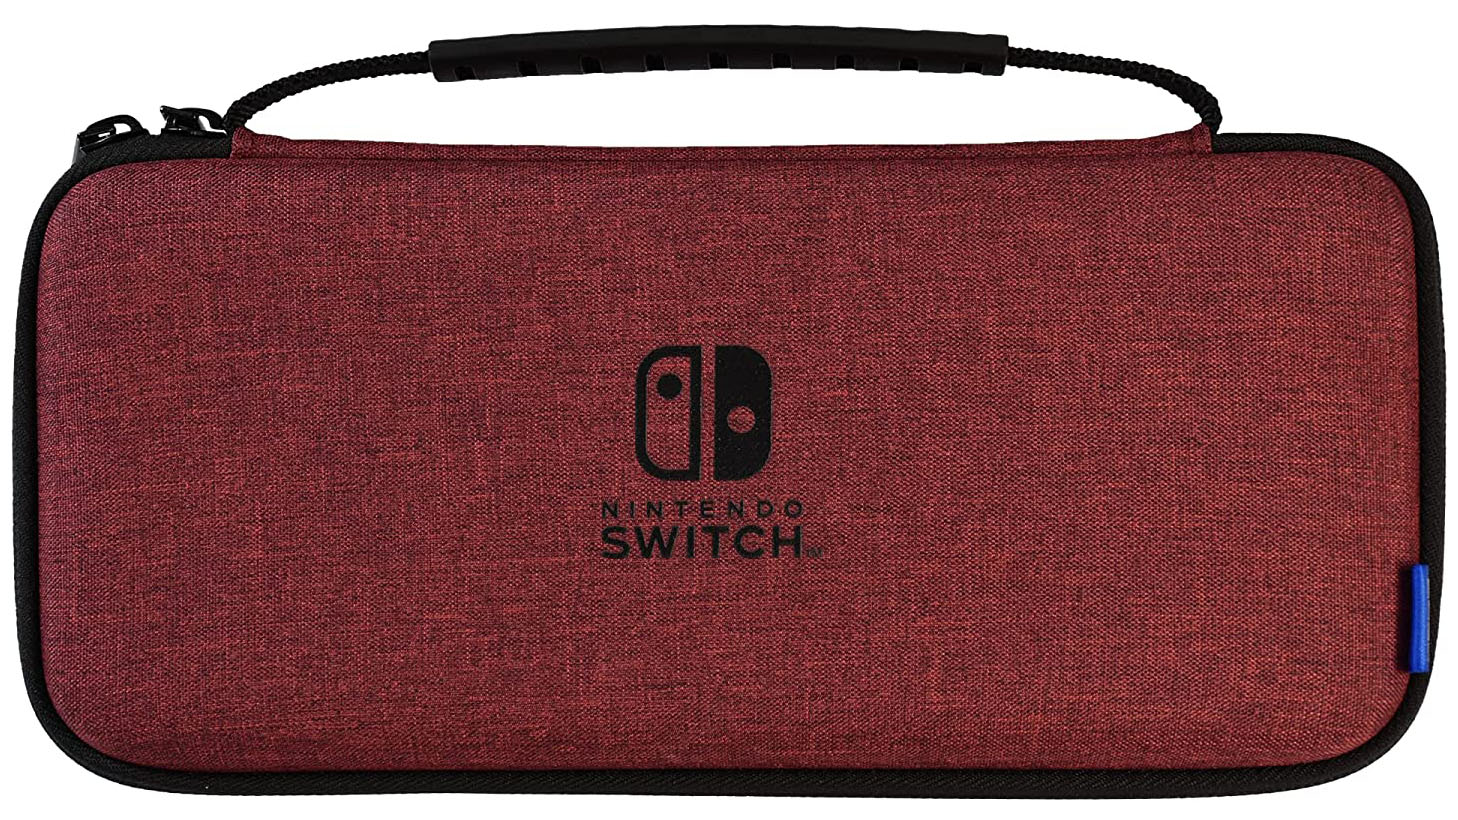 Hori Nintendo Switch Oled Red Case